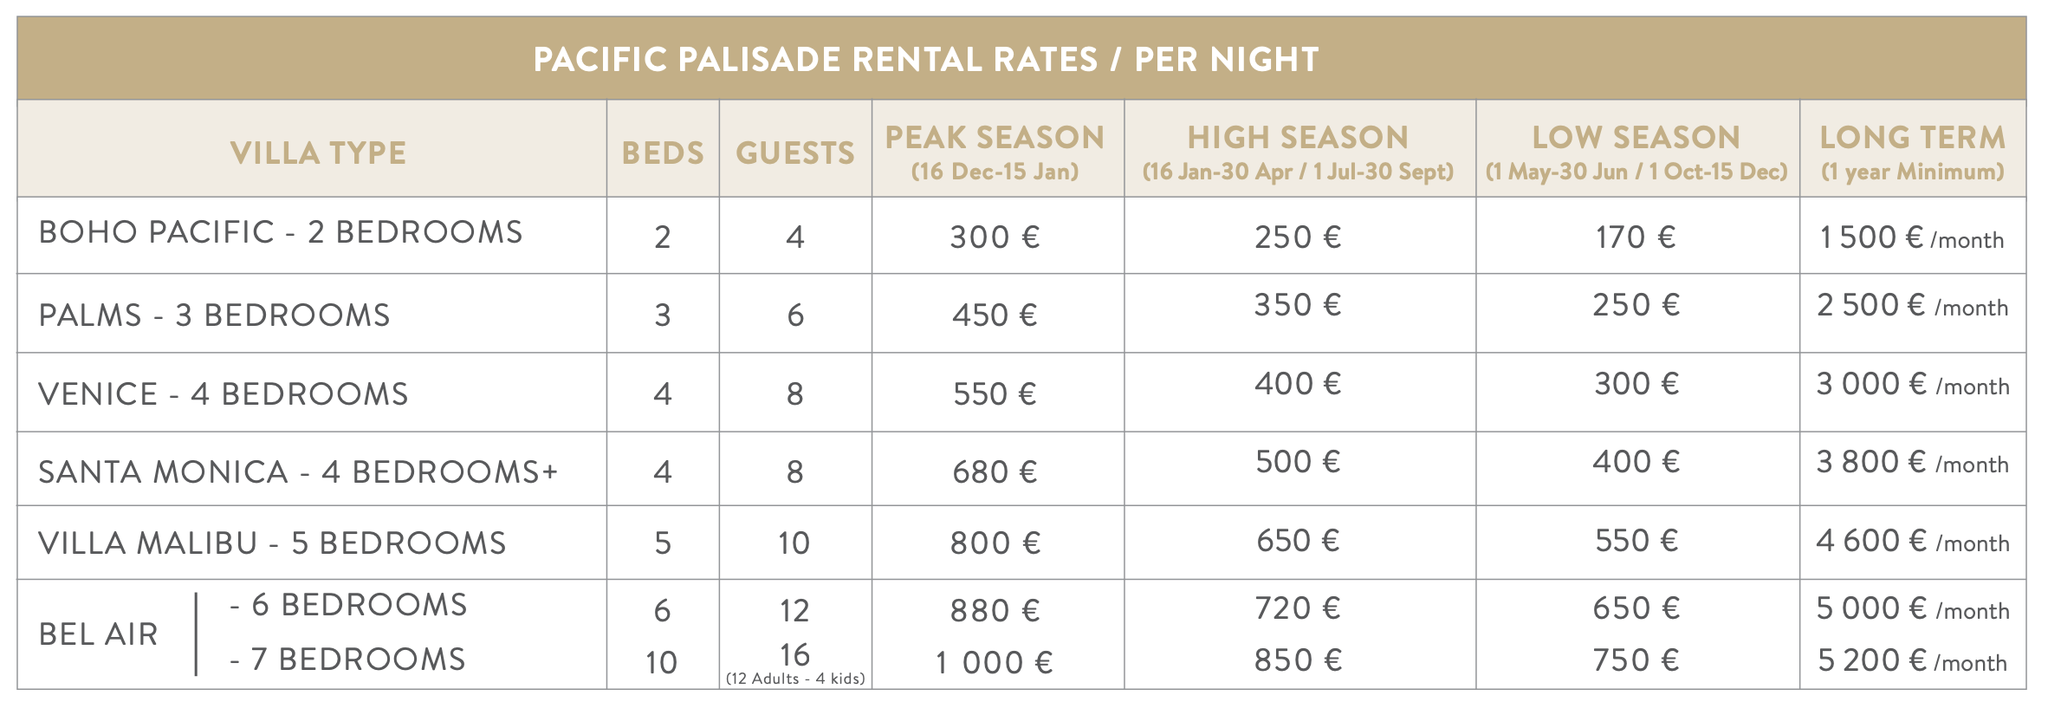 Pacific Palisade rental rates/per night